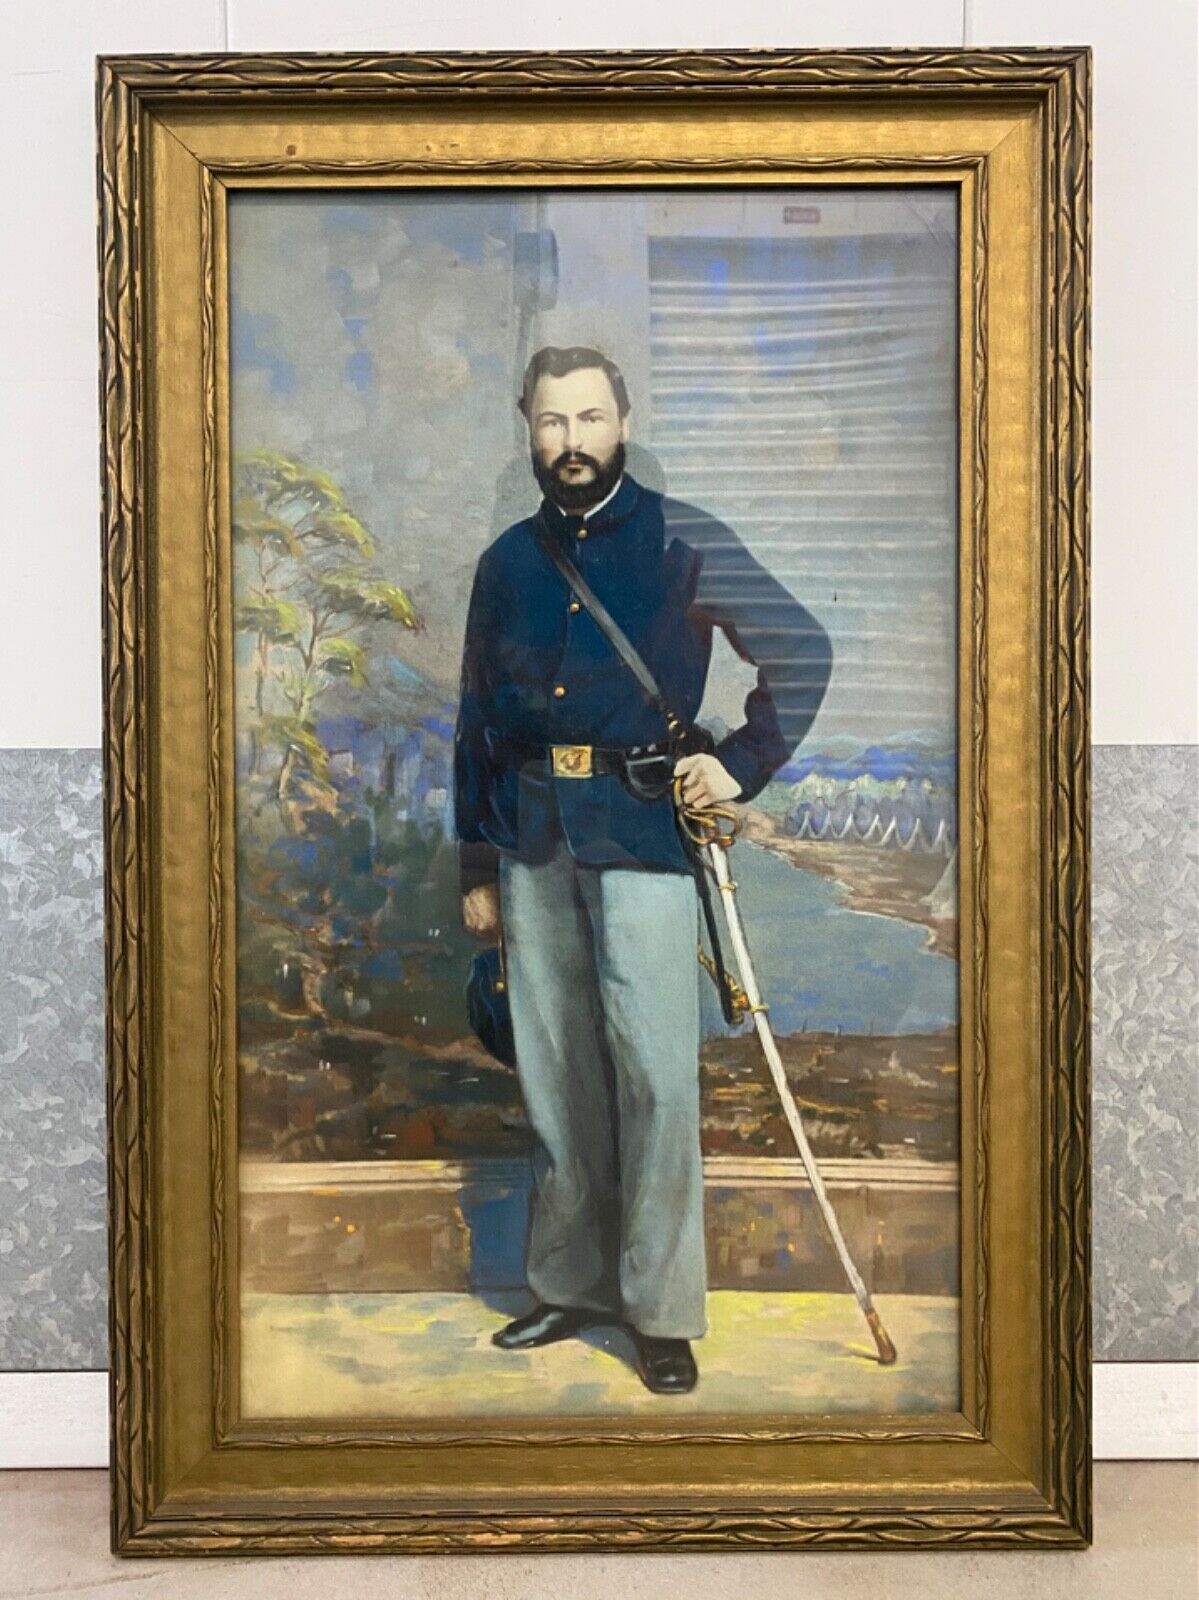 🔥 Fine Antique Old American Civil War Solider Portrait Photo Painting, 1860s